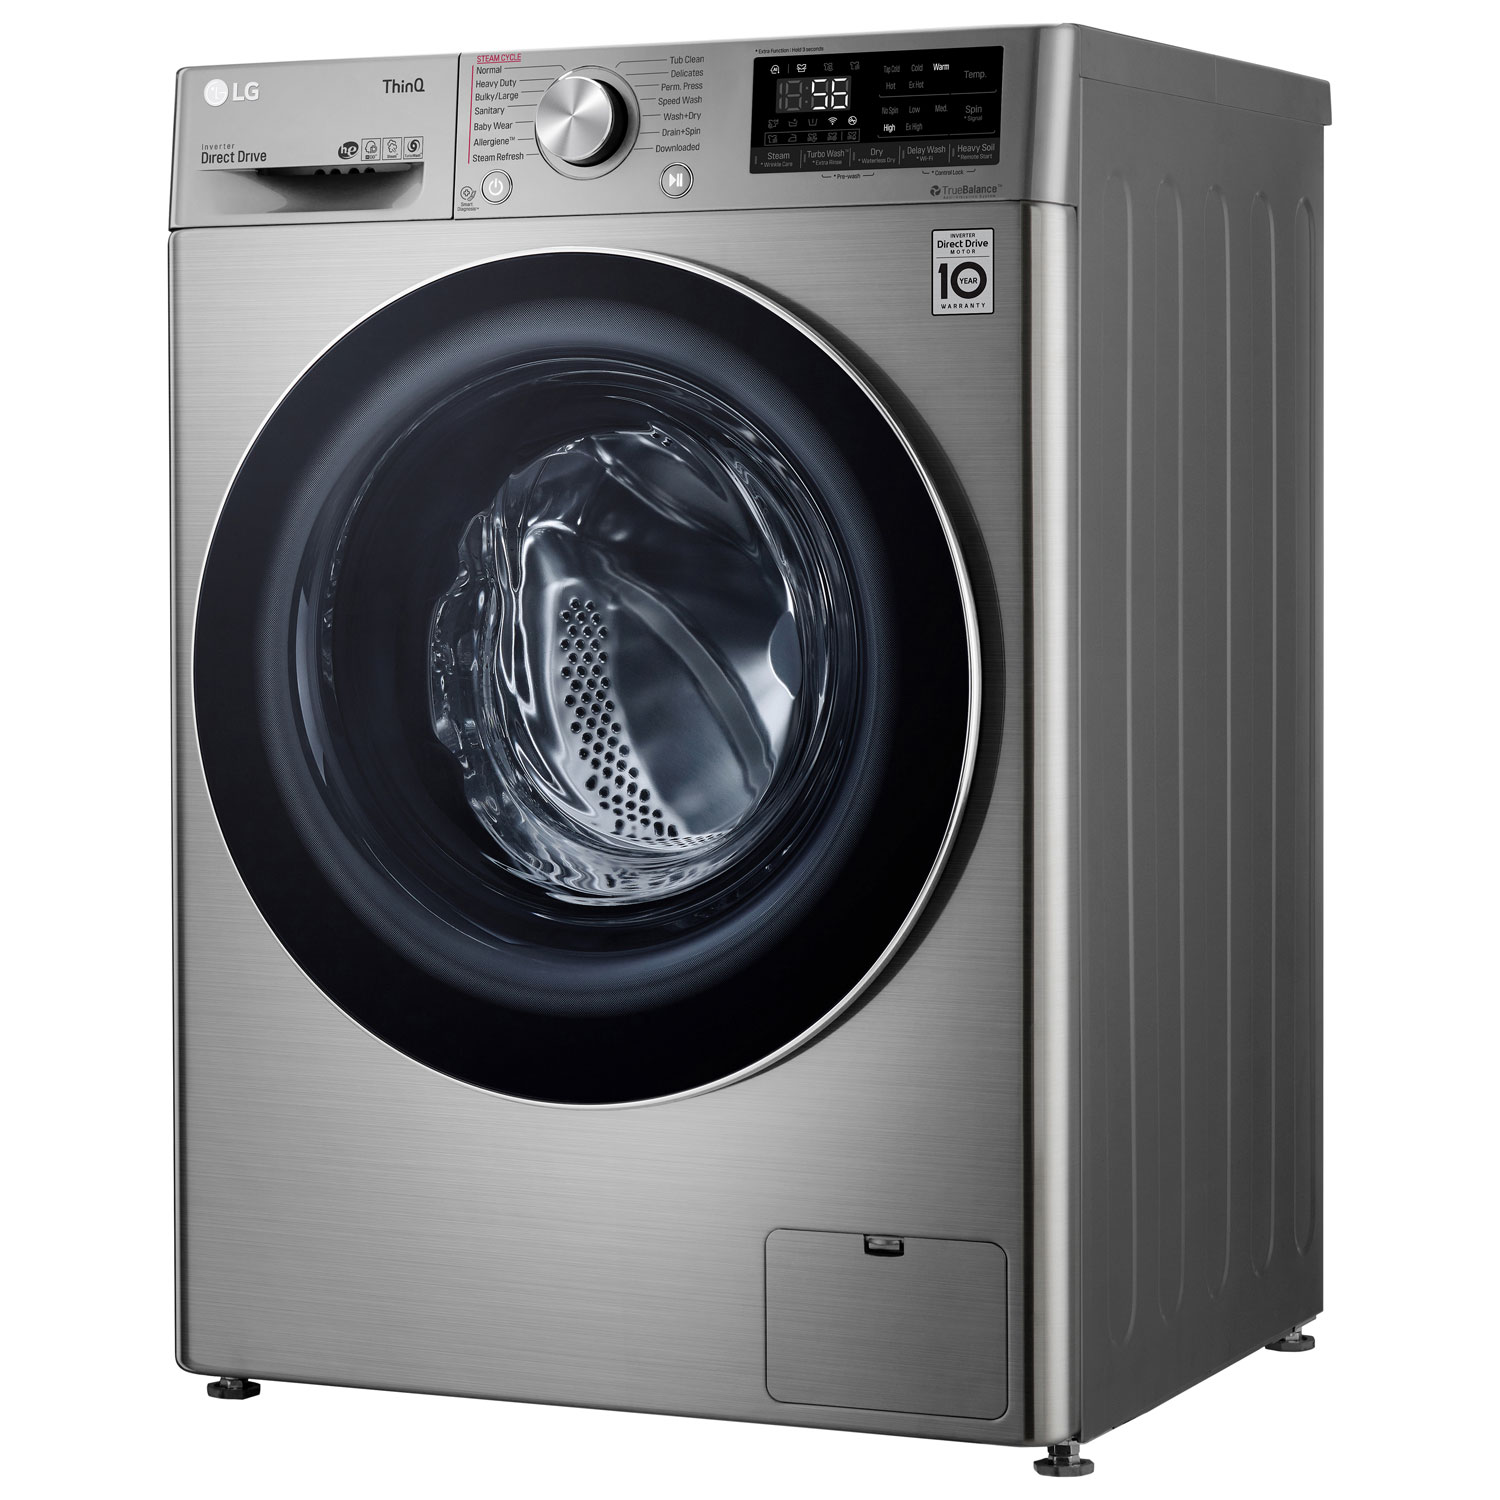 LG 2.6 Cu. Ft. Electric High Efficiency Washer & Dryer Combo (WM3555HVA) - Graphite Steel